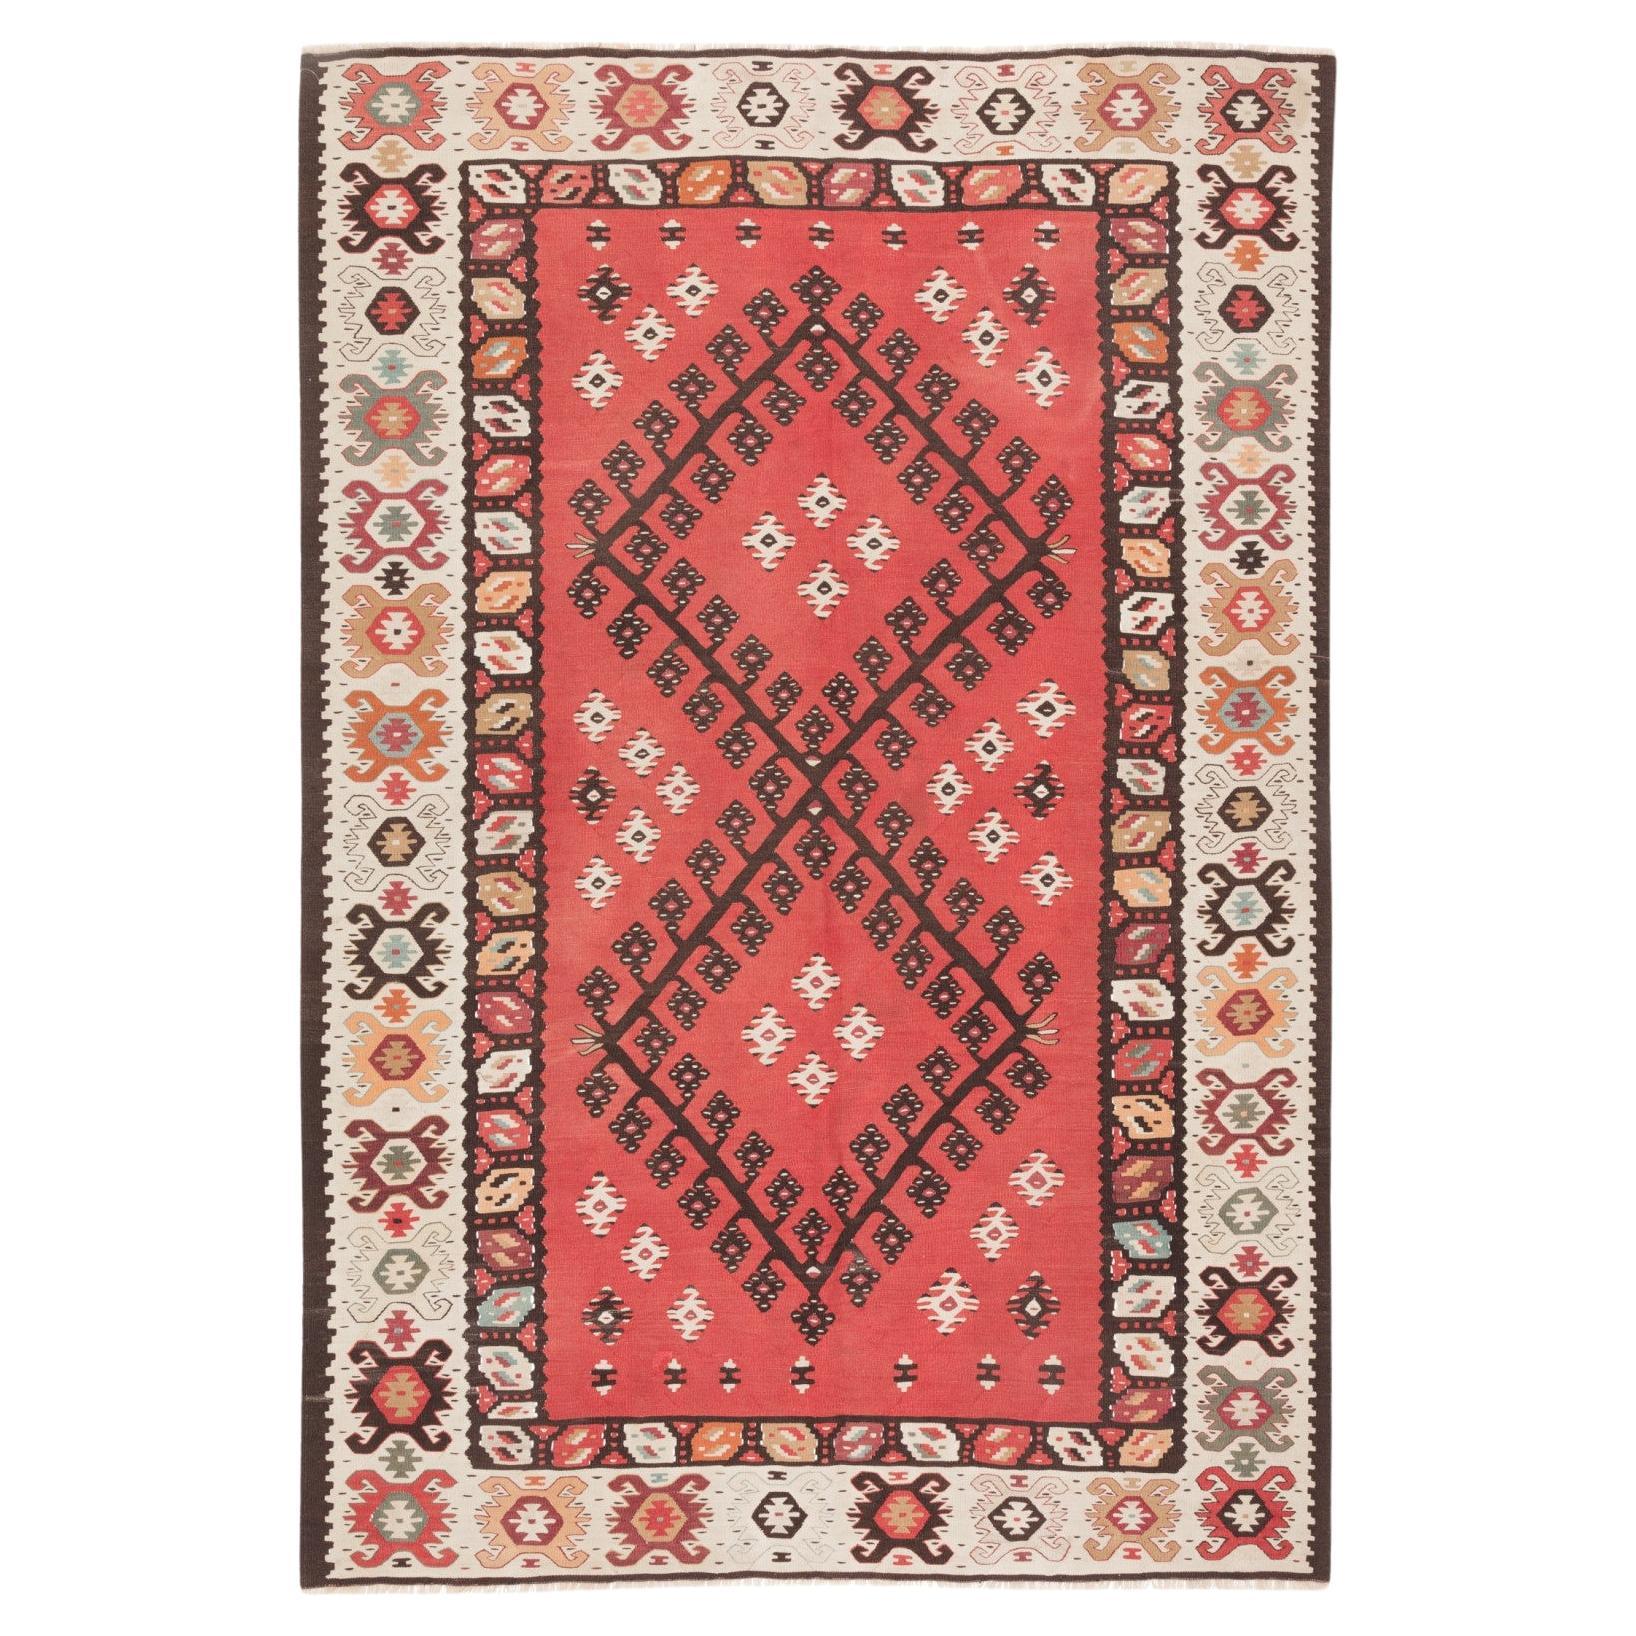 Western Anatolian Turkish Carpet, Balkan Style Unique